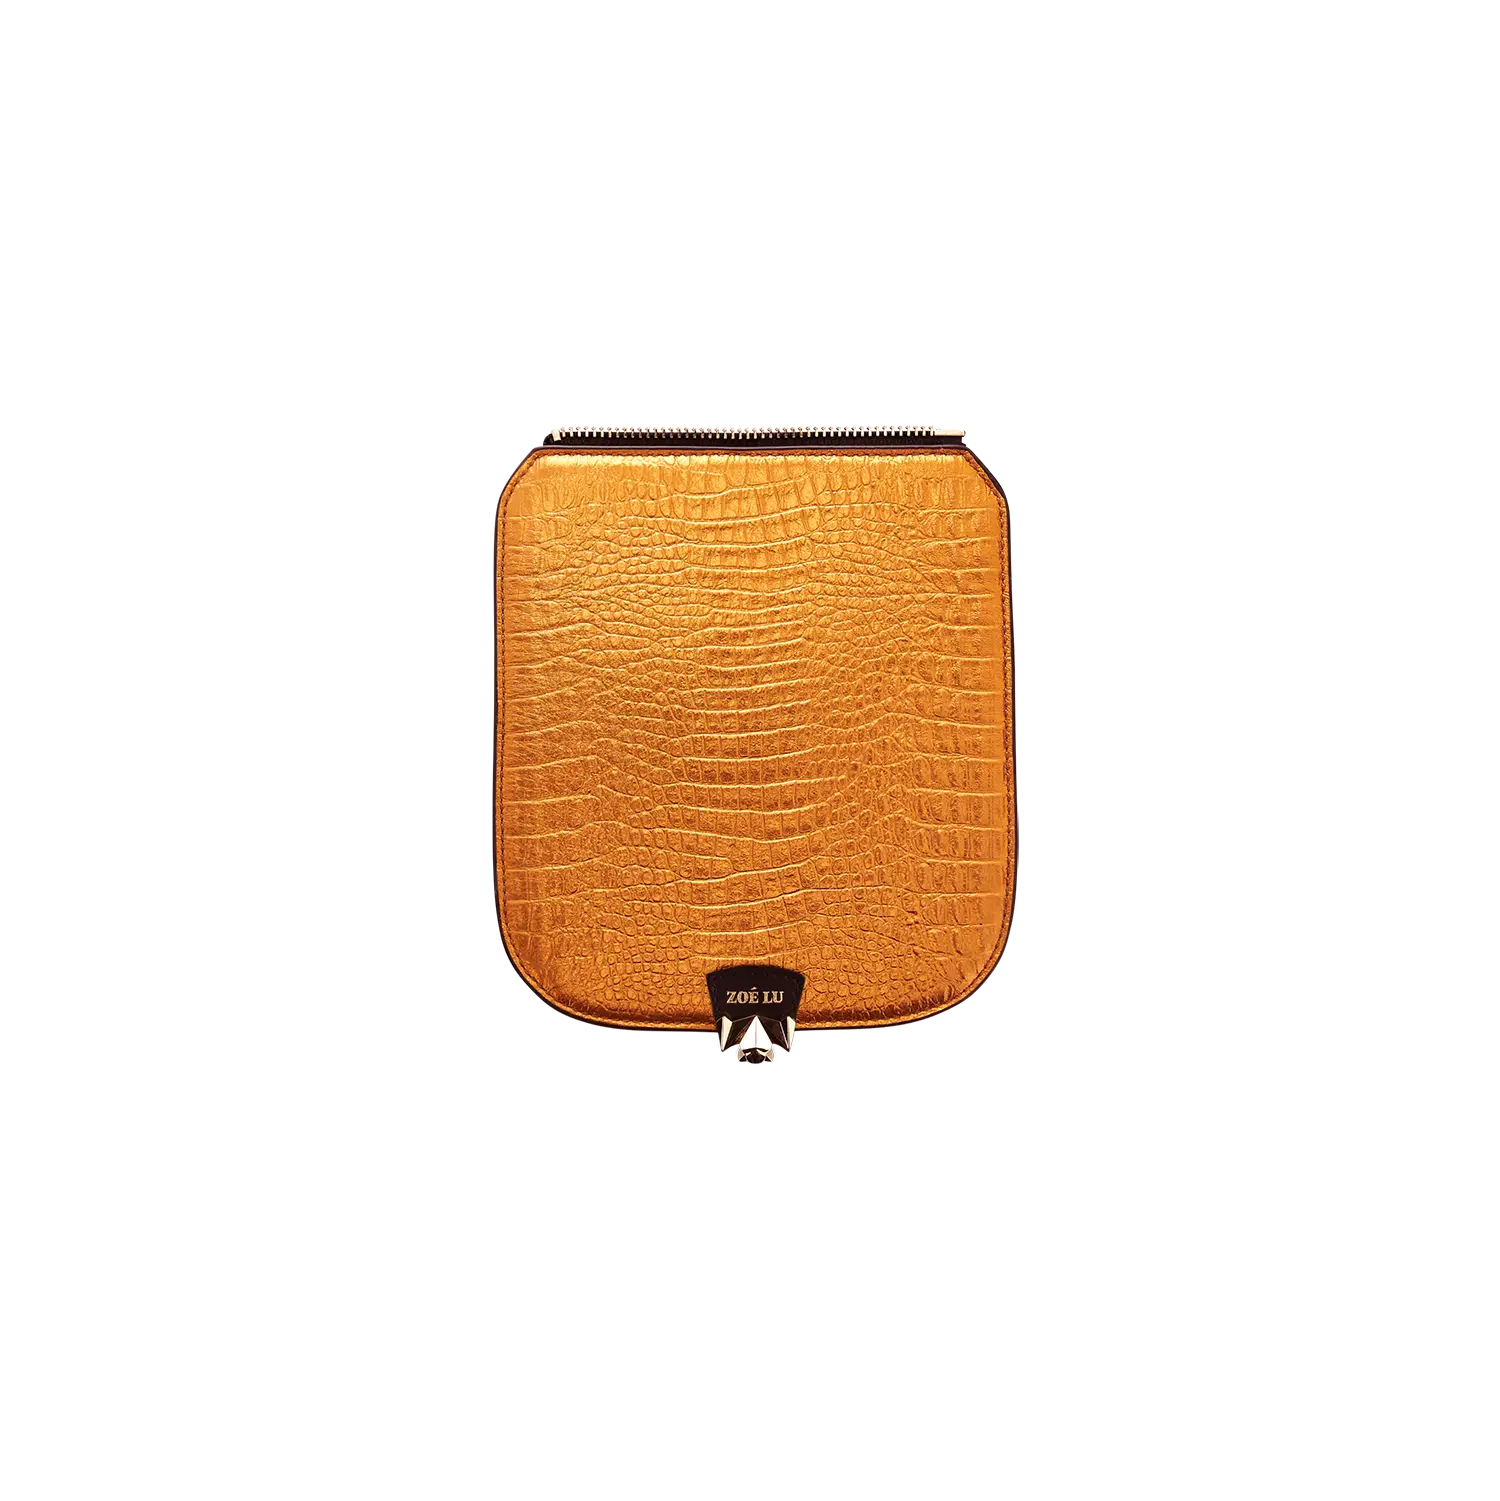 Wechselklappe - Mini Tangerine Gator - orange-metallic